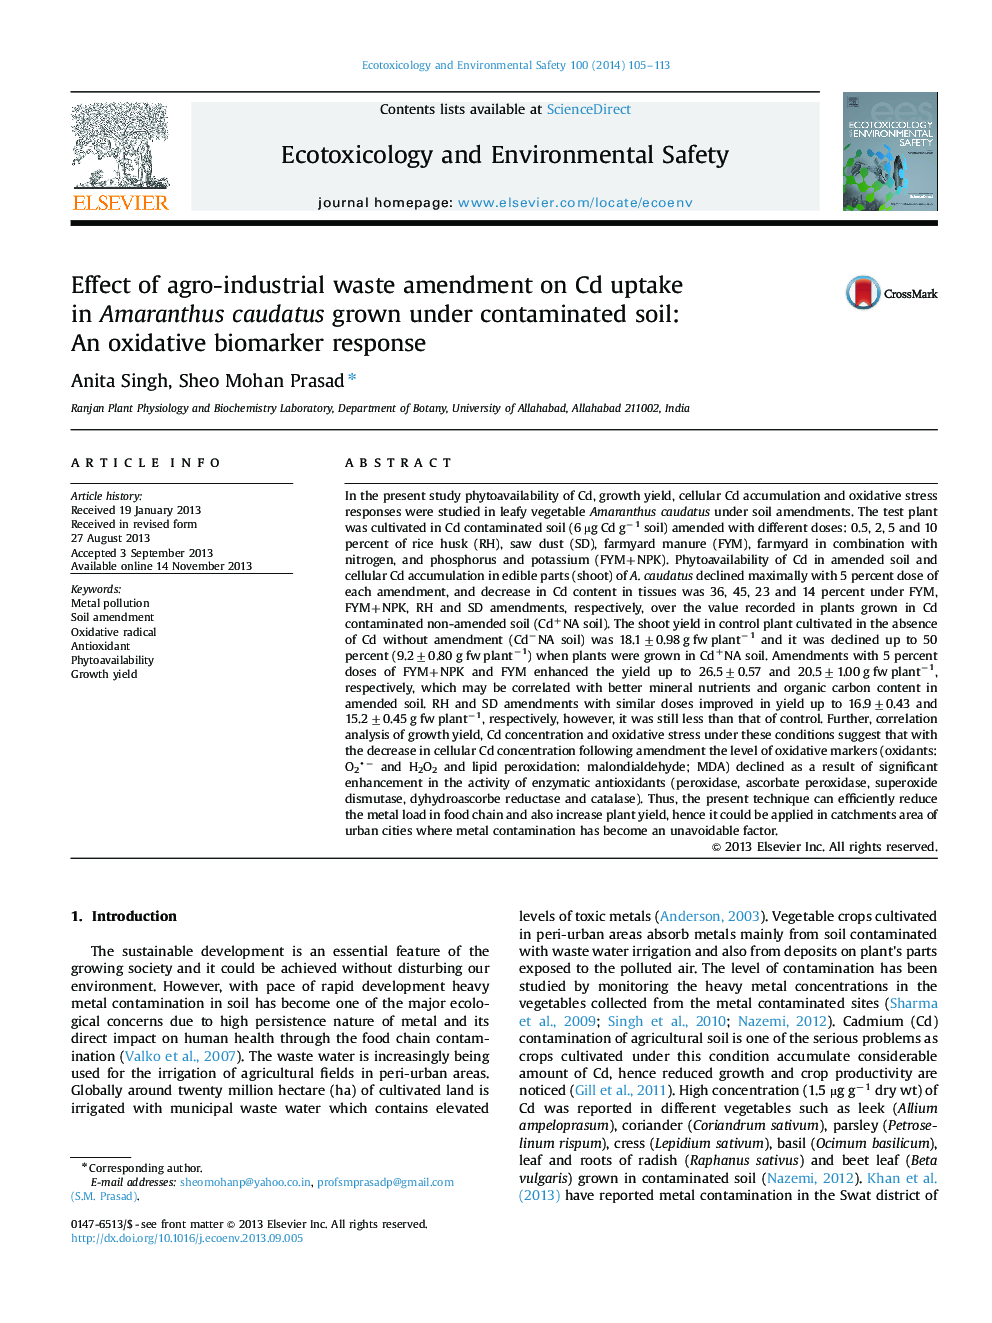 Effect of agro-industrial waste amendment on Cd uptake in Amaranthus caudatus grown under contaminated soil: An oxidative biomarker response